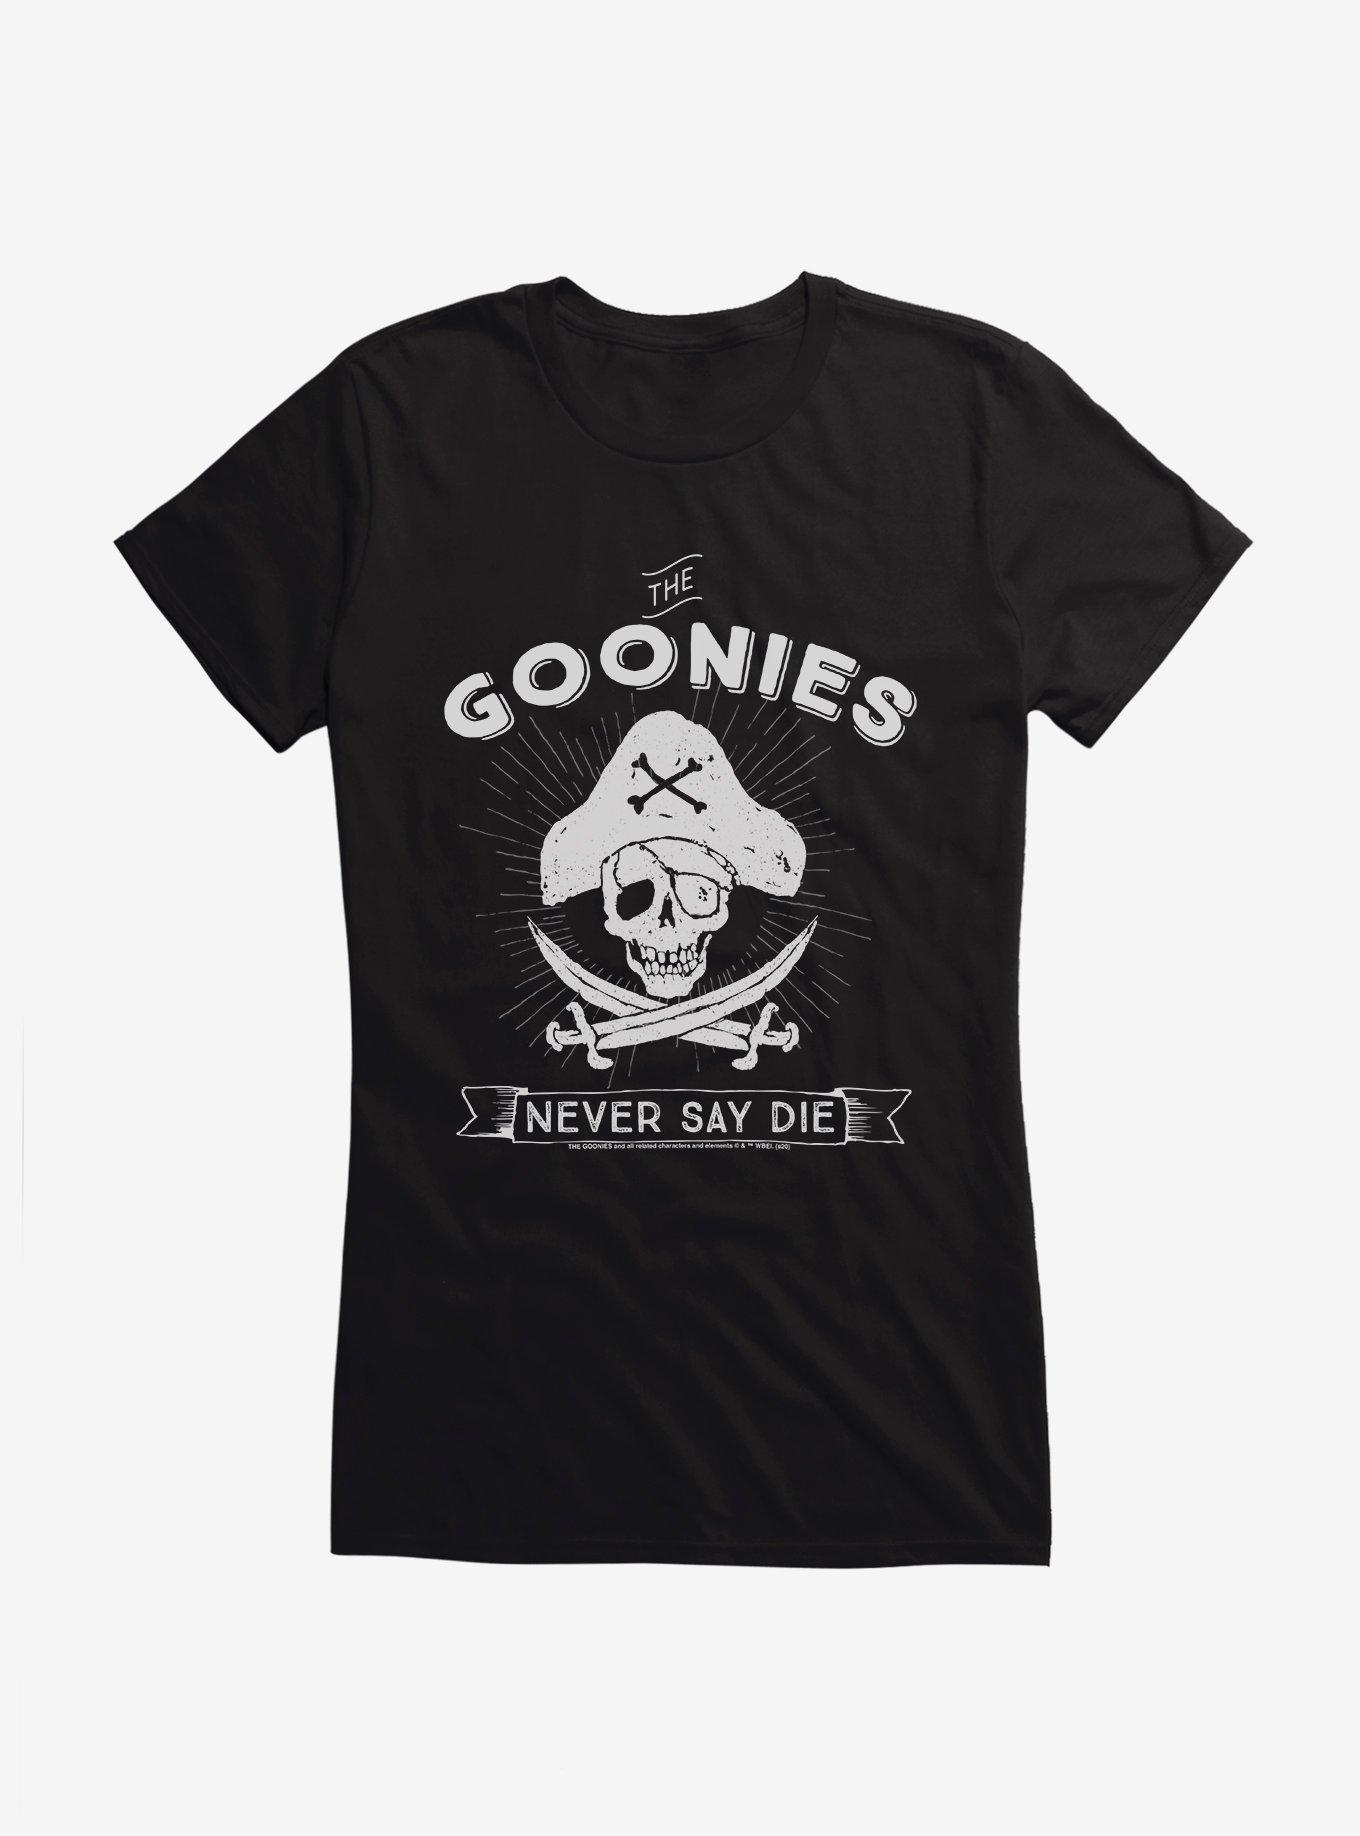 The Goonies Never Say Die Girls T-Shirt